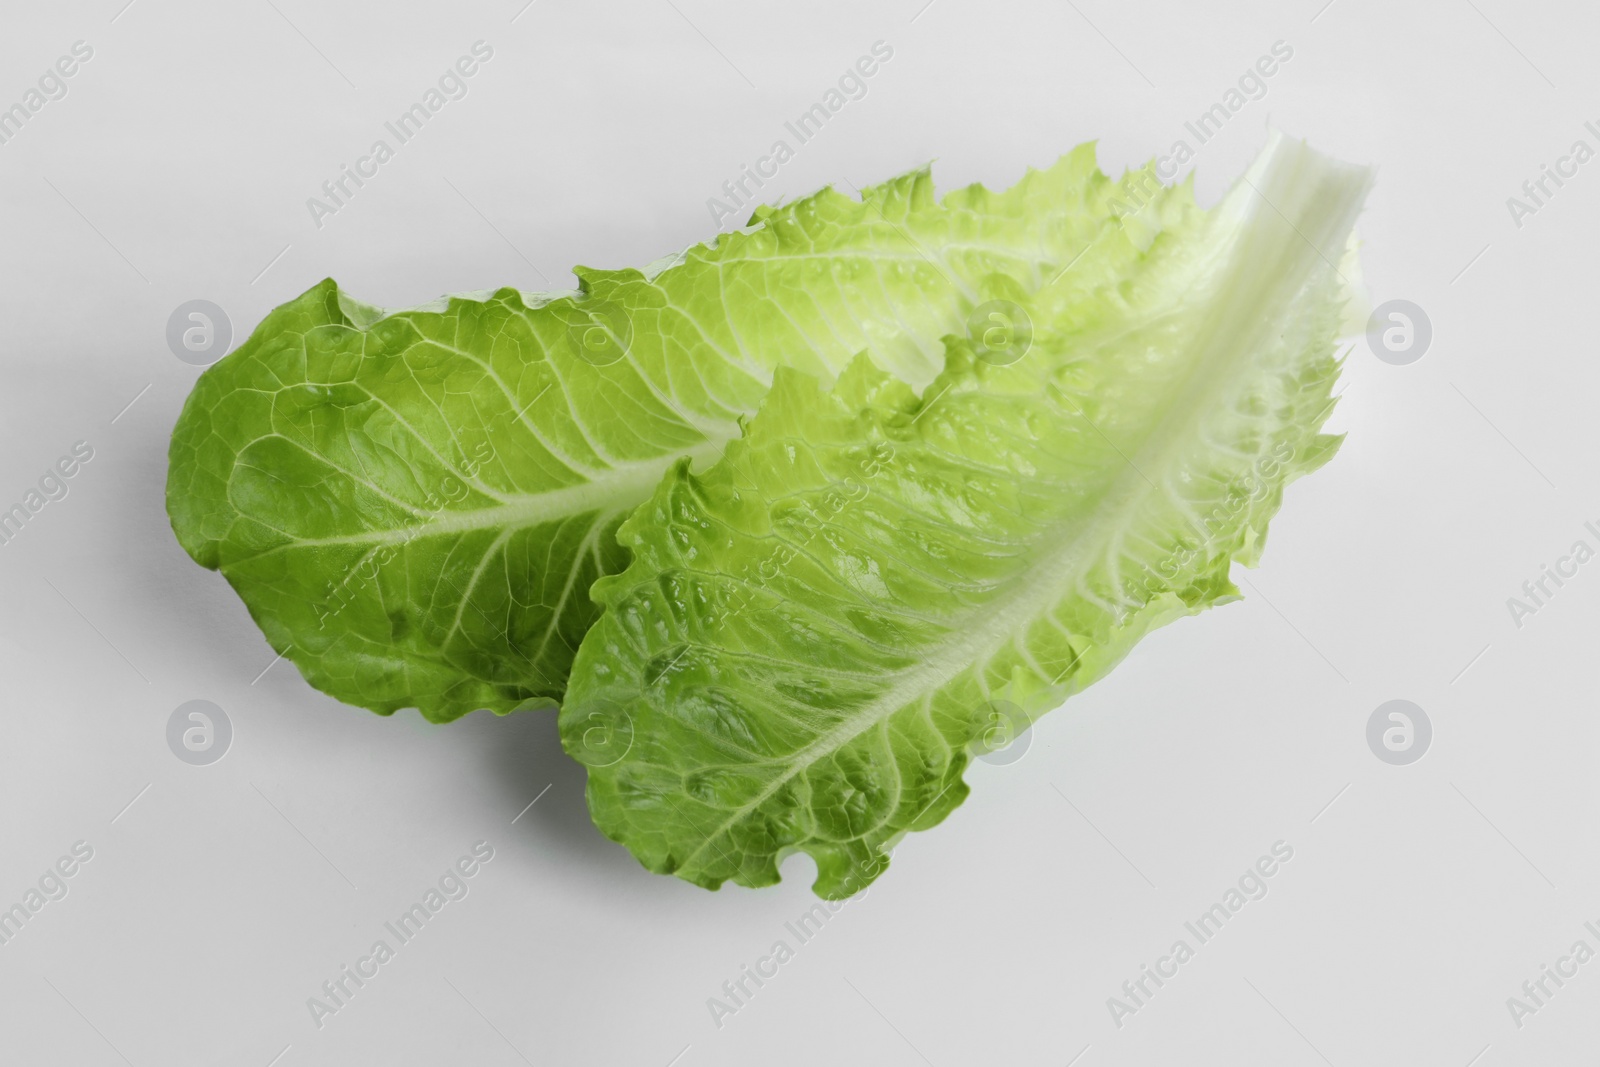 Photo of Fresh green leaves of romaine lettuce on white background